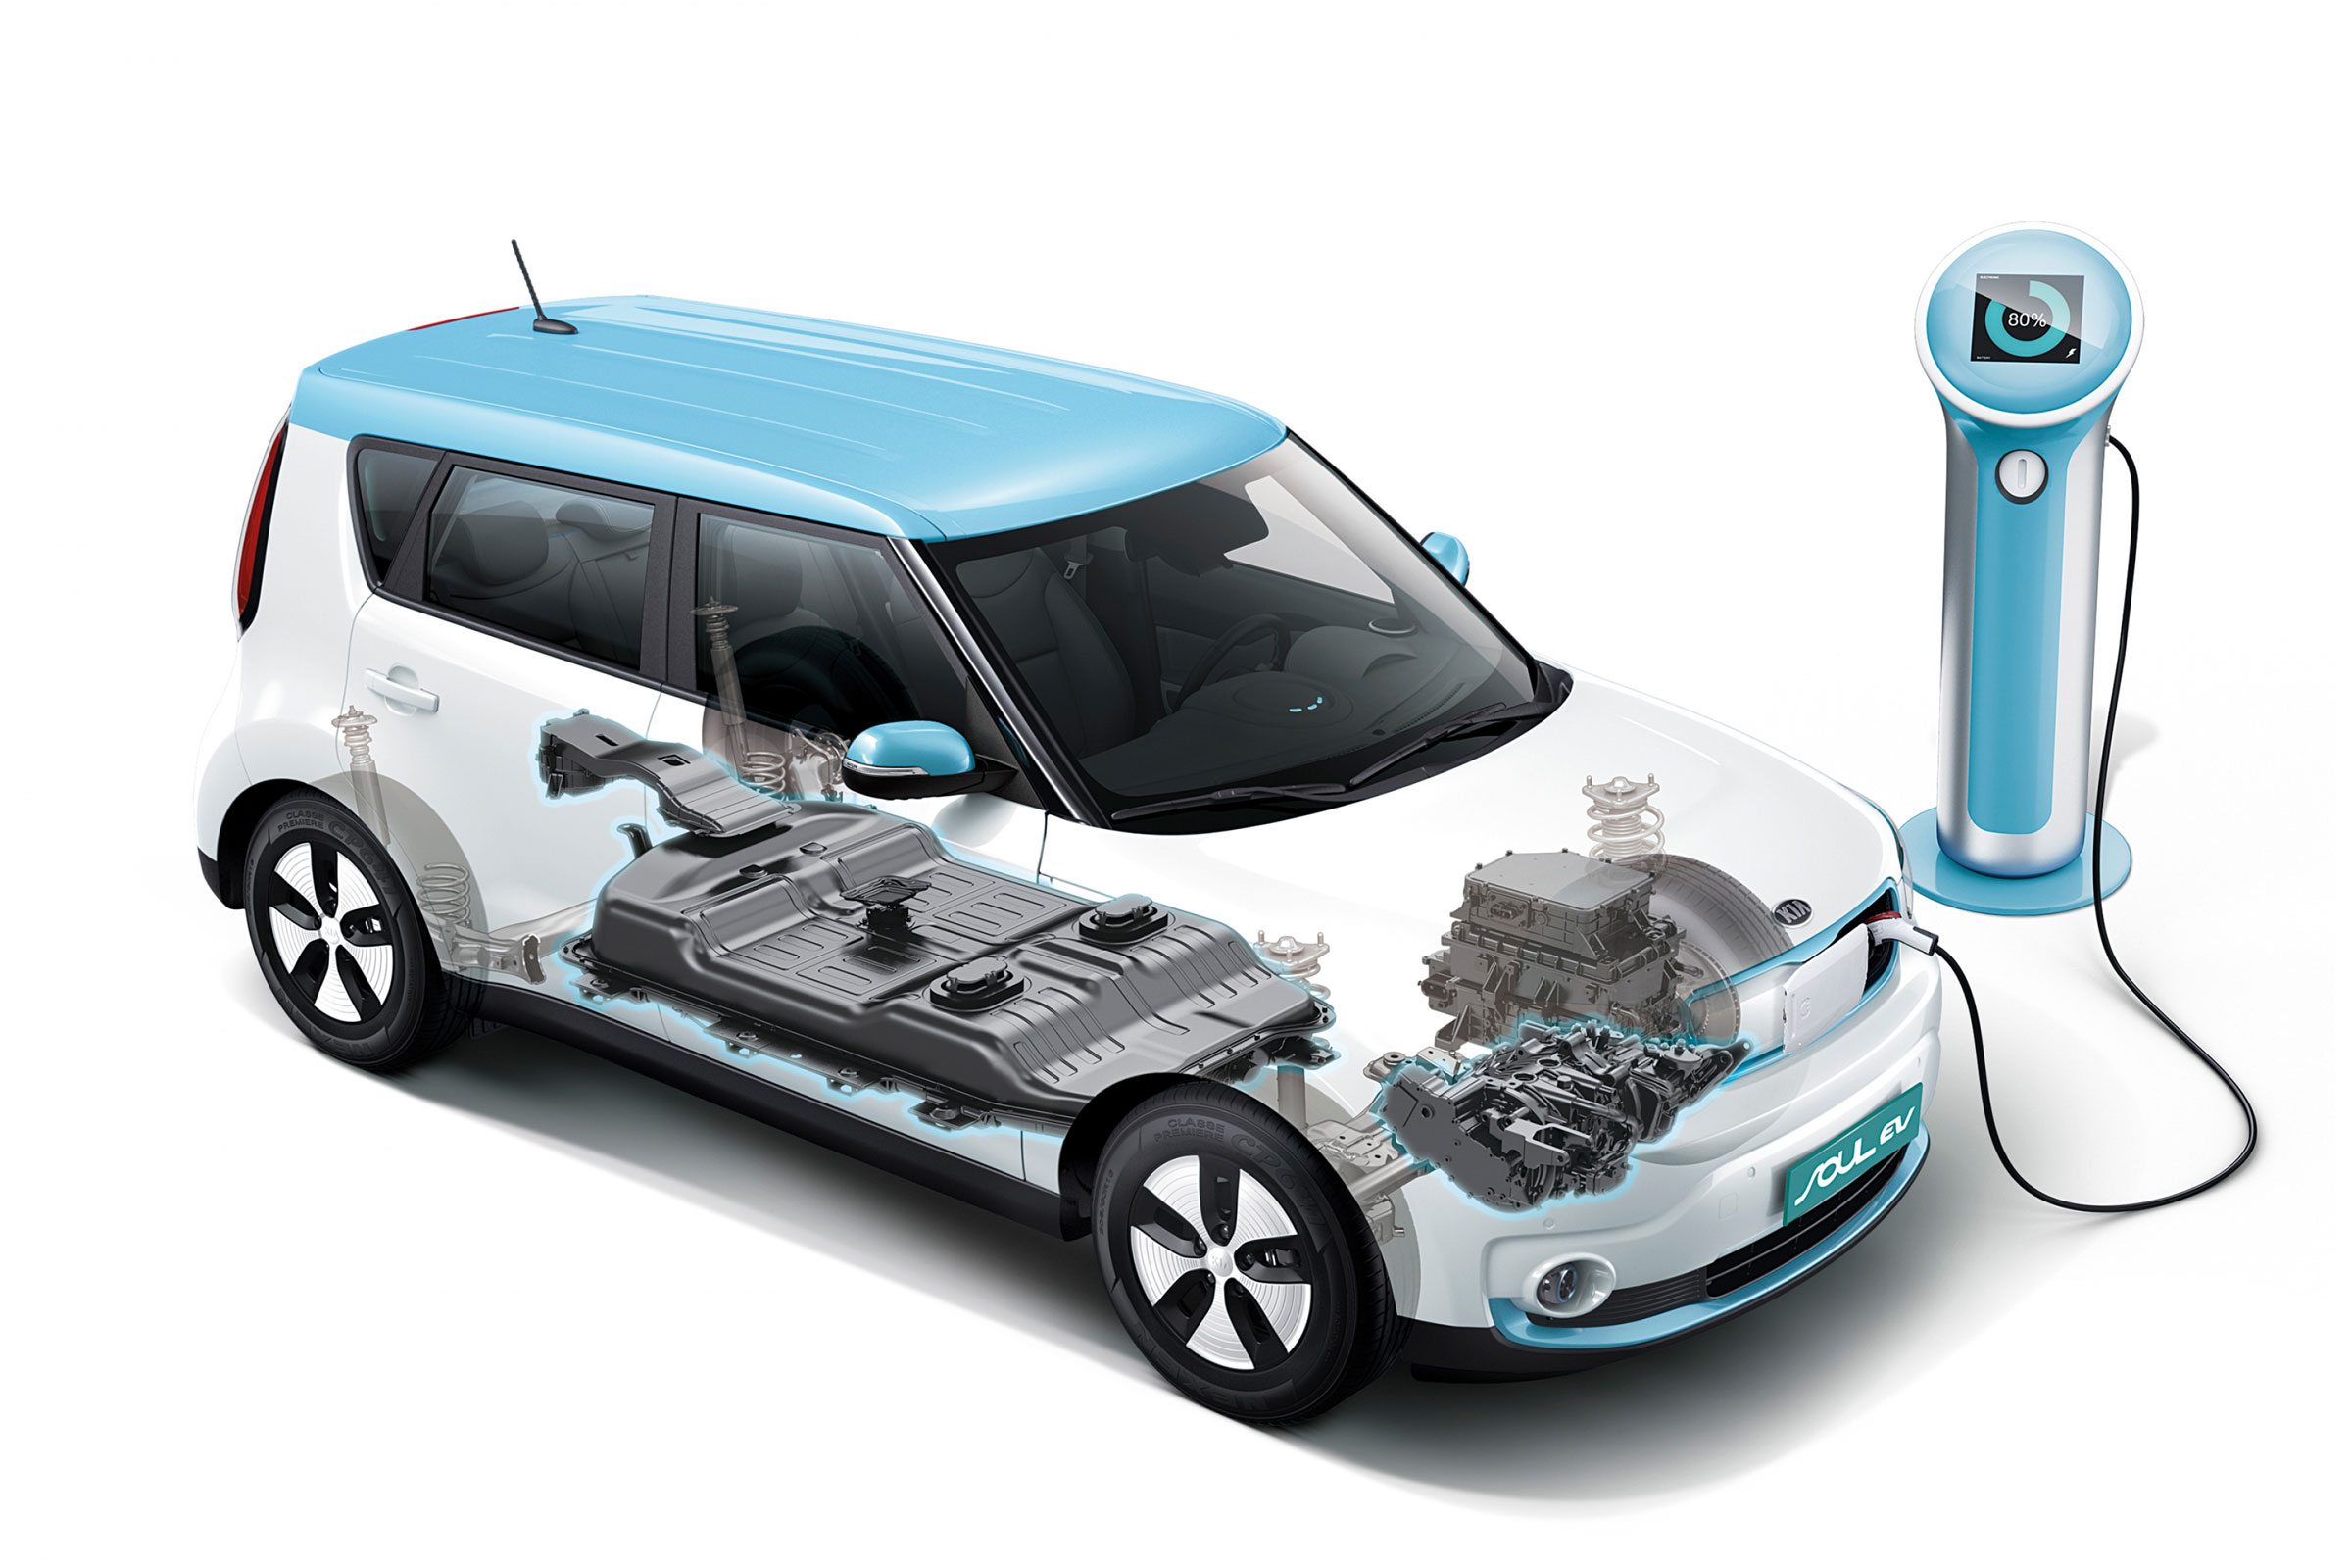 Kia Soul EV (2014-2018) range, battery & charging | DrivingElectric